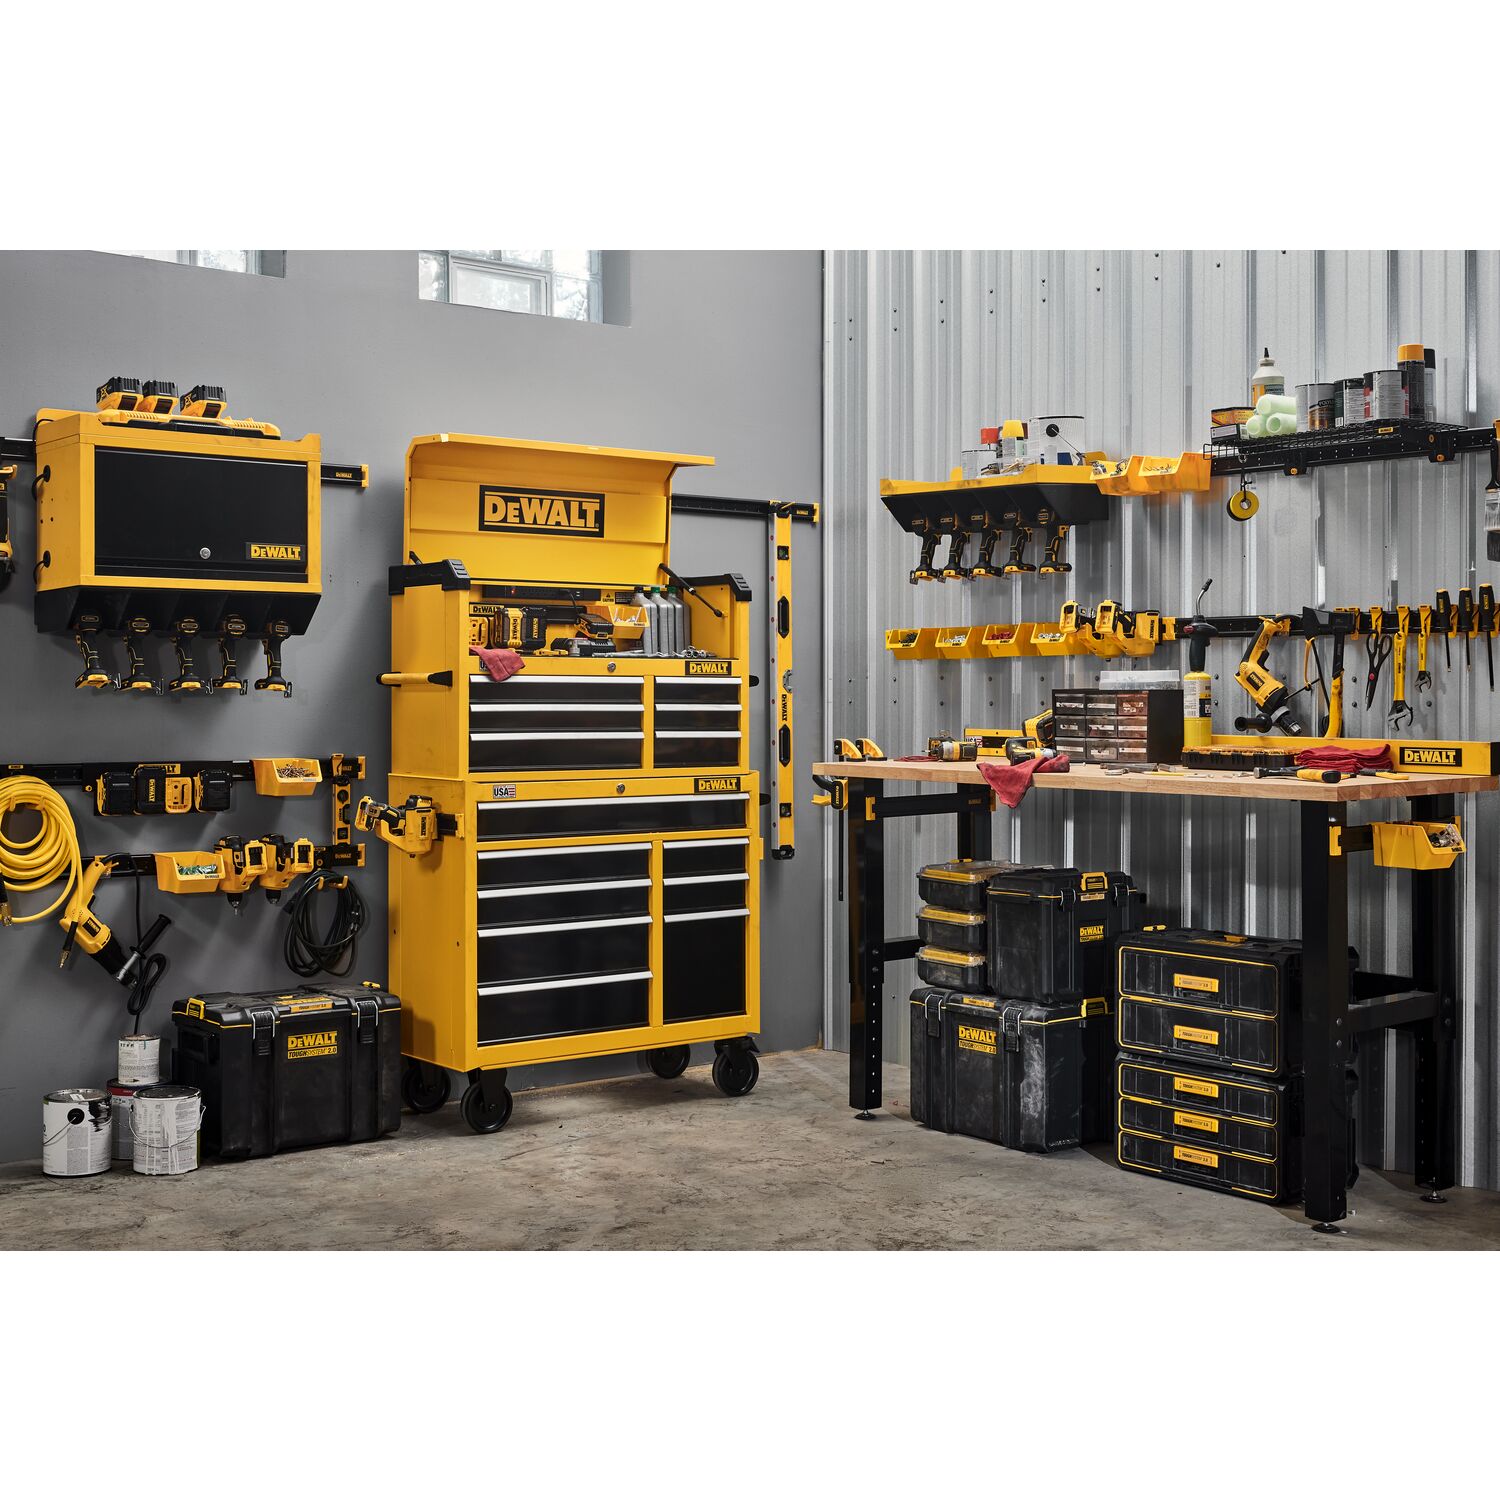 Optimize Your Workspace with the New DEWALT Metal Workshop Storage System